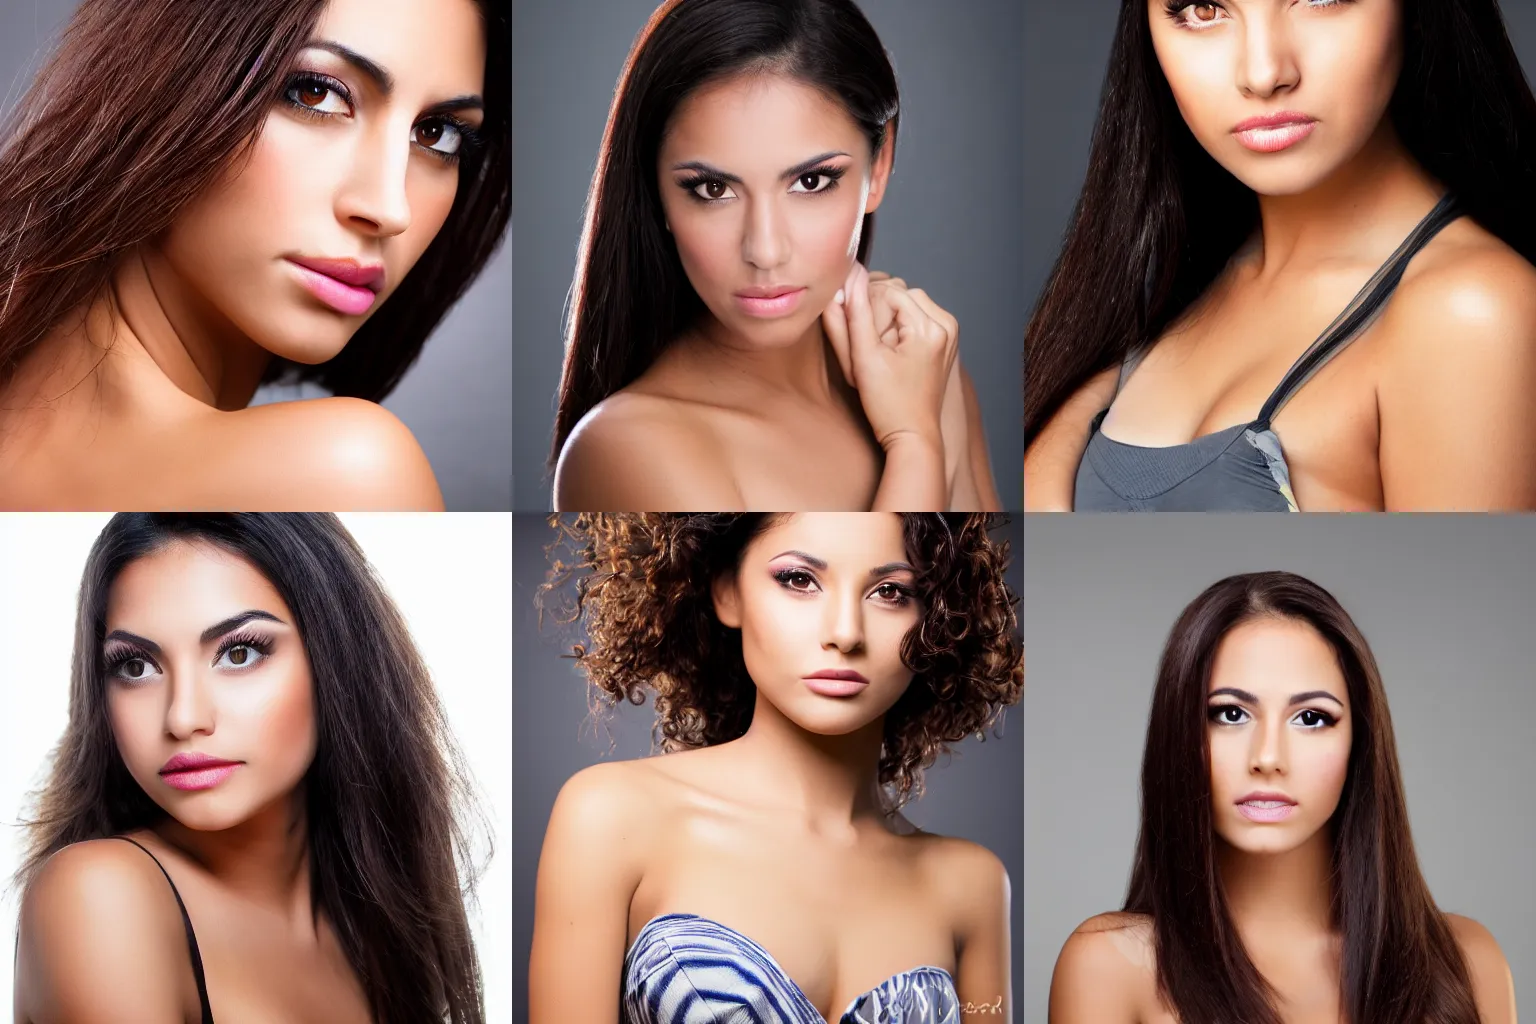 Prompt: Latina model face, high quality, studio lighting, professional